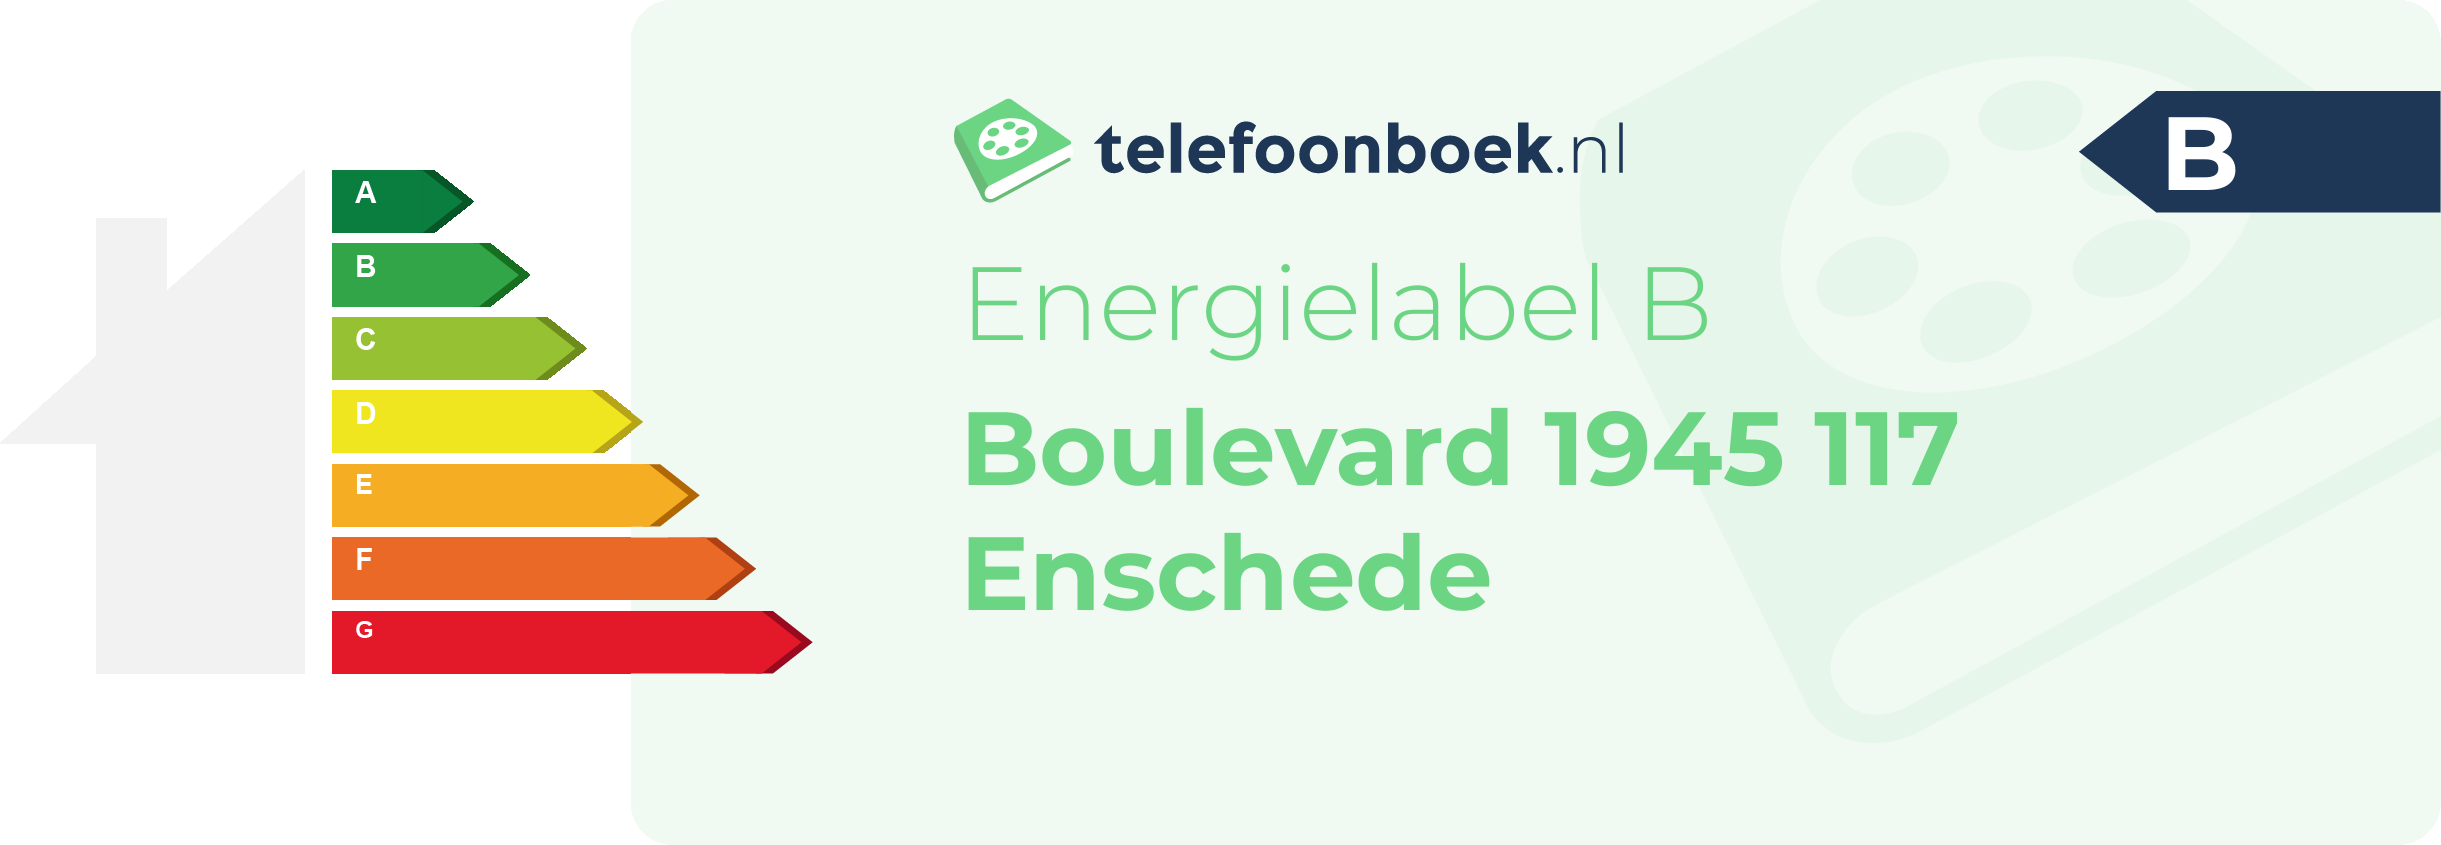 Energielabel Boulevard 1945 117 Enschede